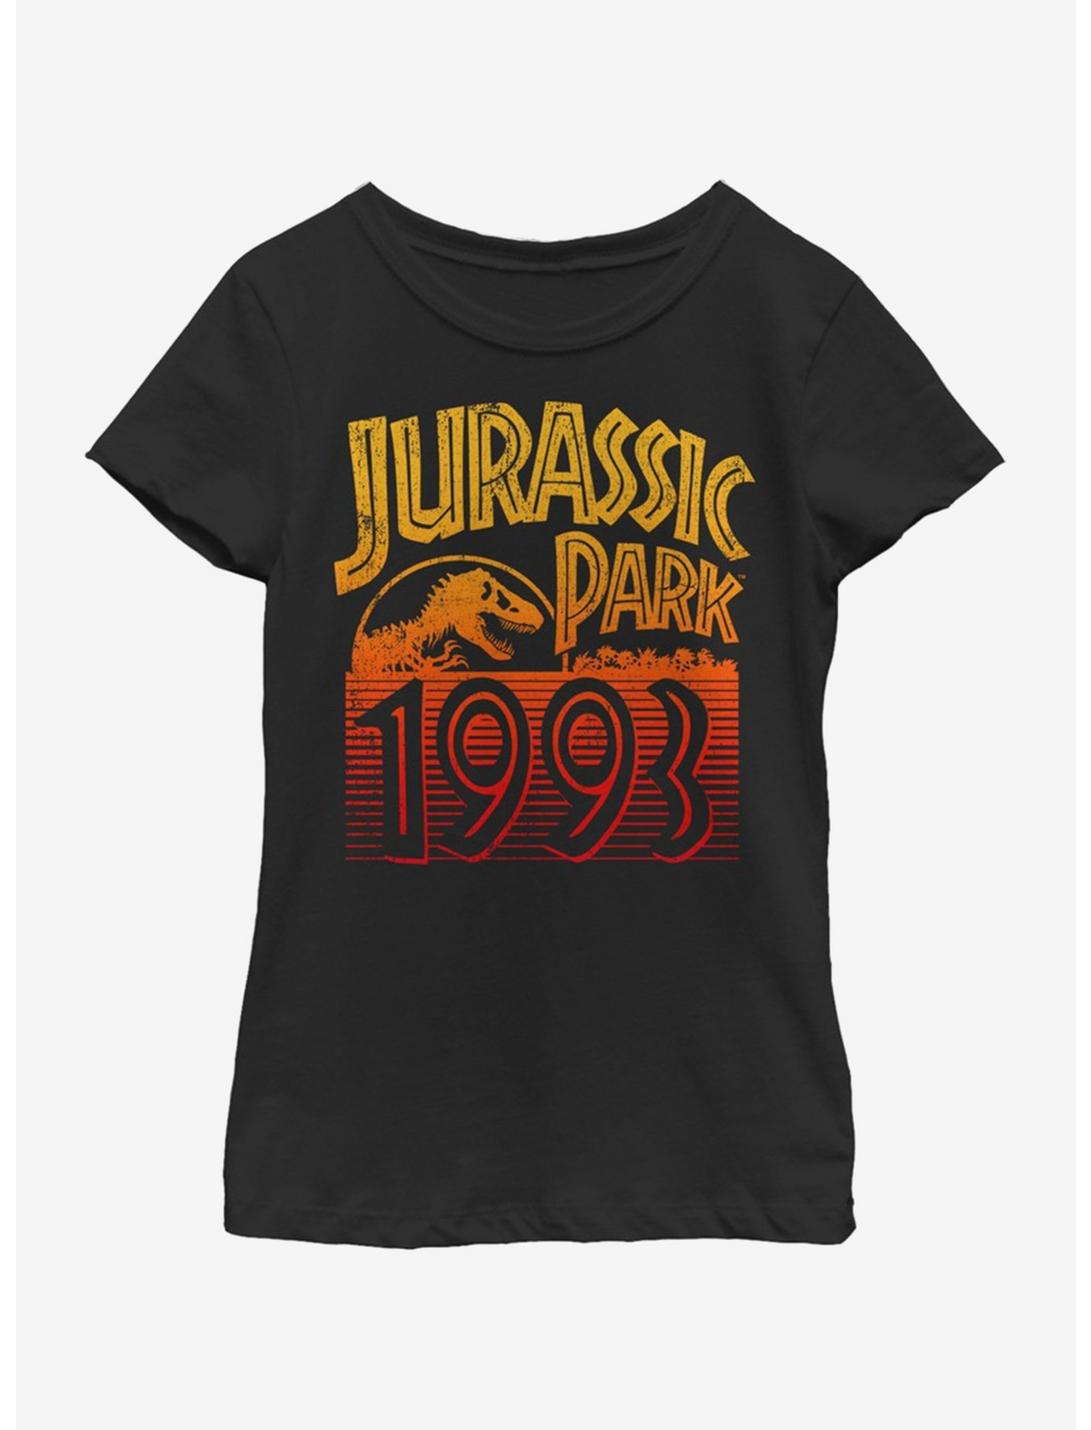 Jurassic Park Park and Ride Youth Girls T-Shirt, BLACK, hi-res